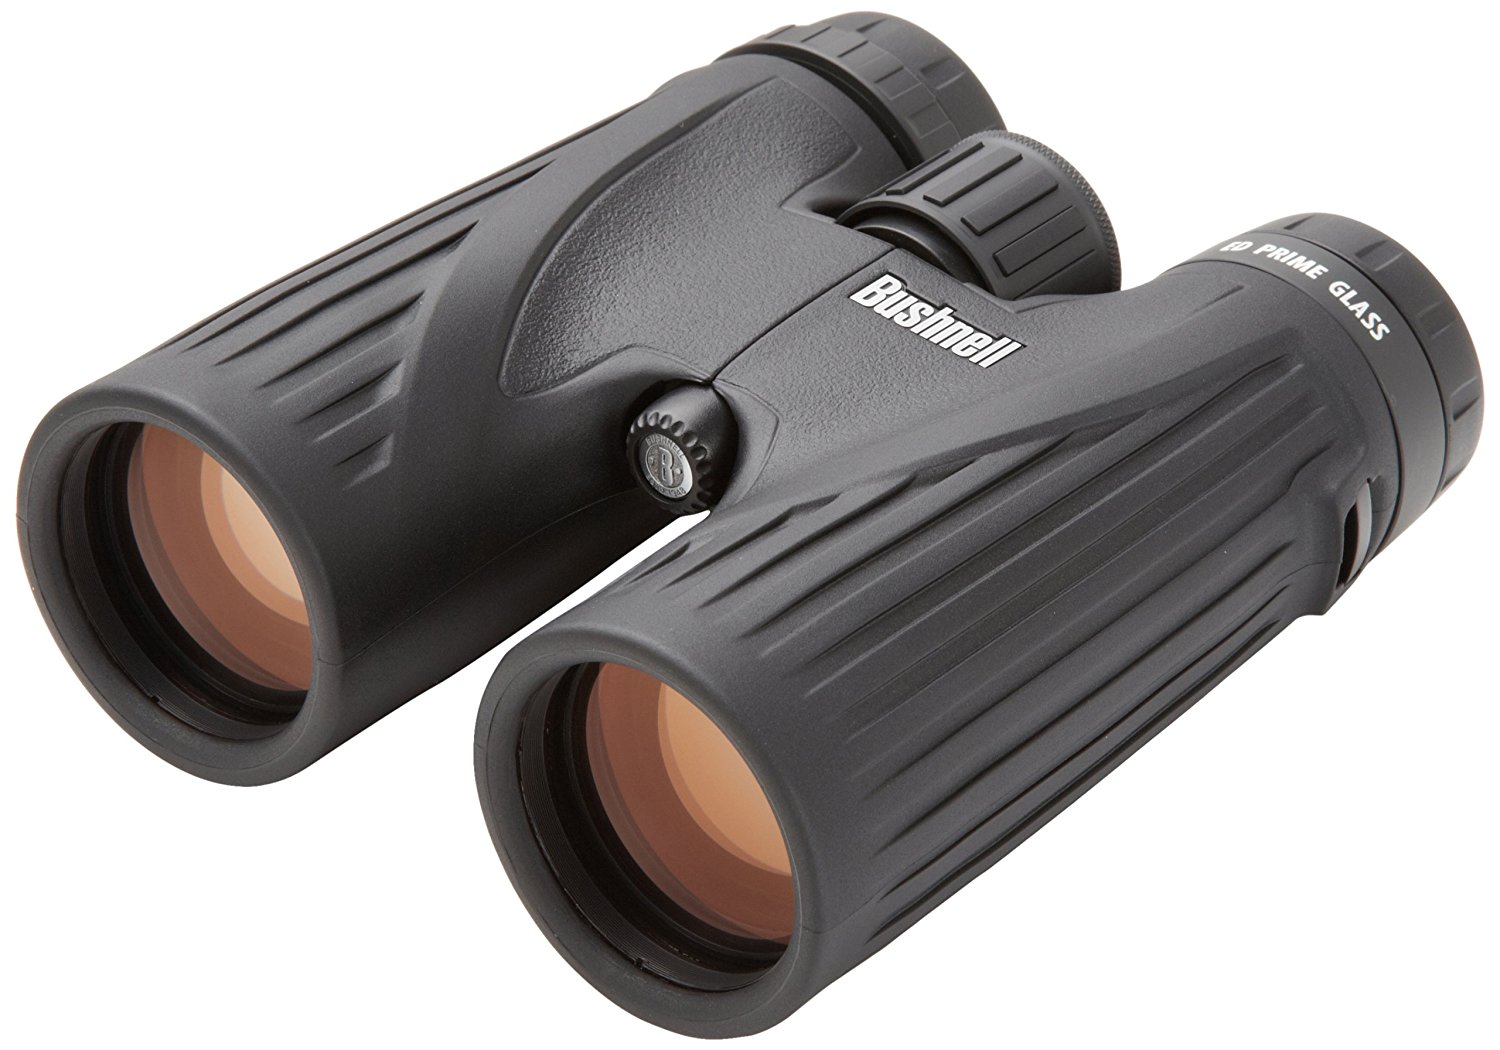 Save on the Bushnell Legend Ultra HD 10×42 Binoculars – Just $154.99!